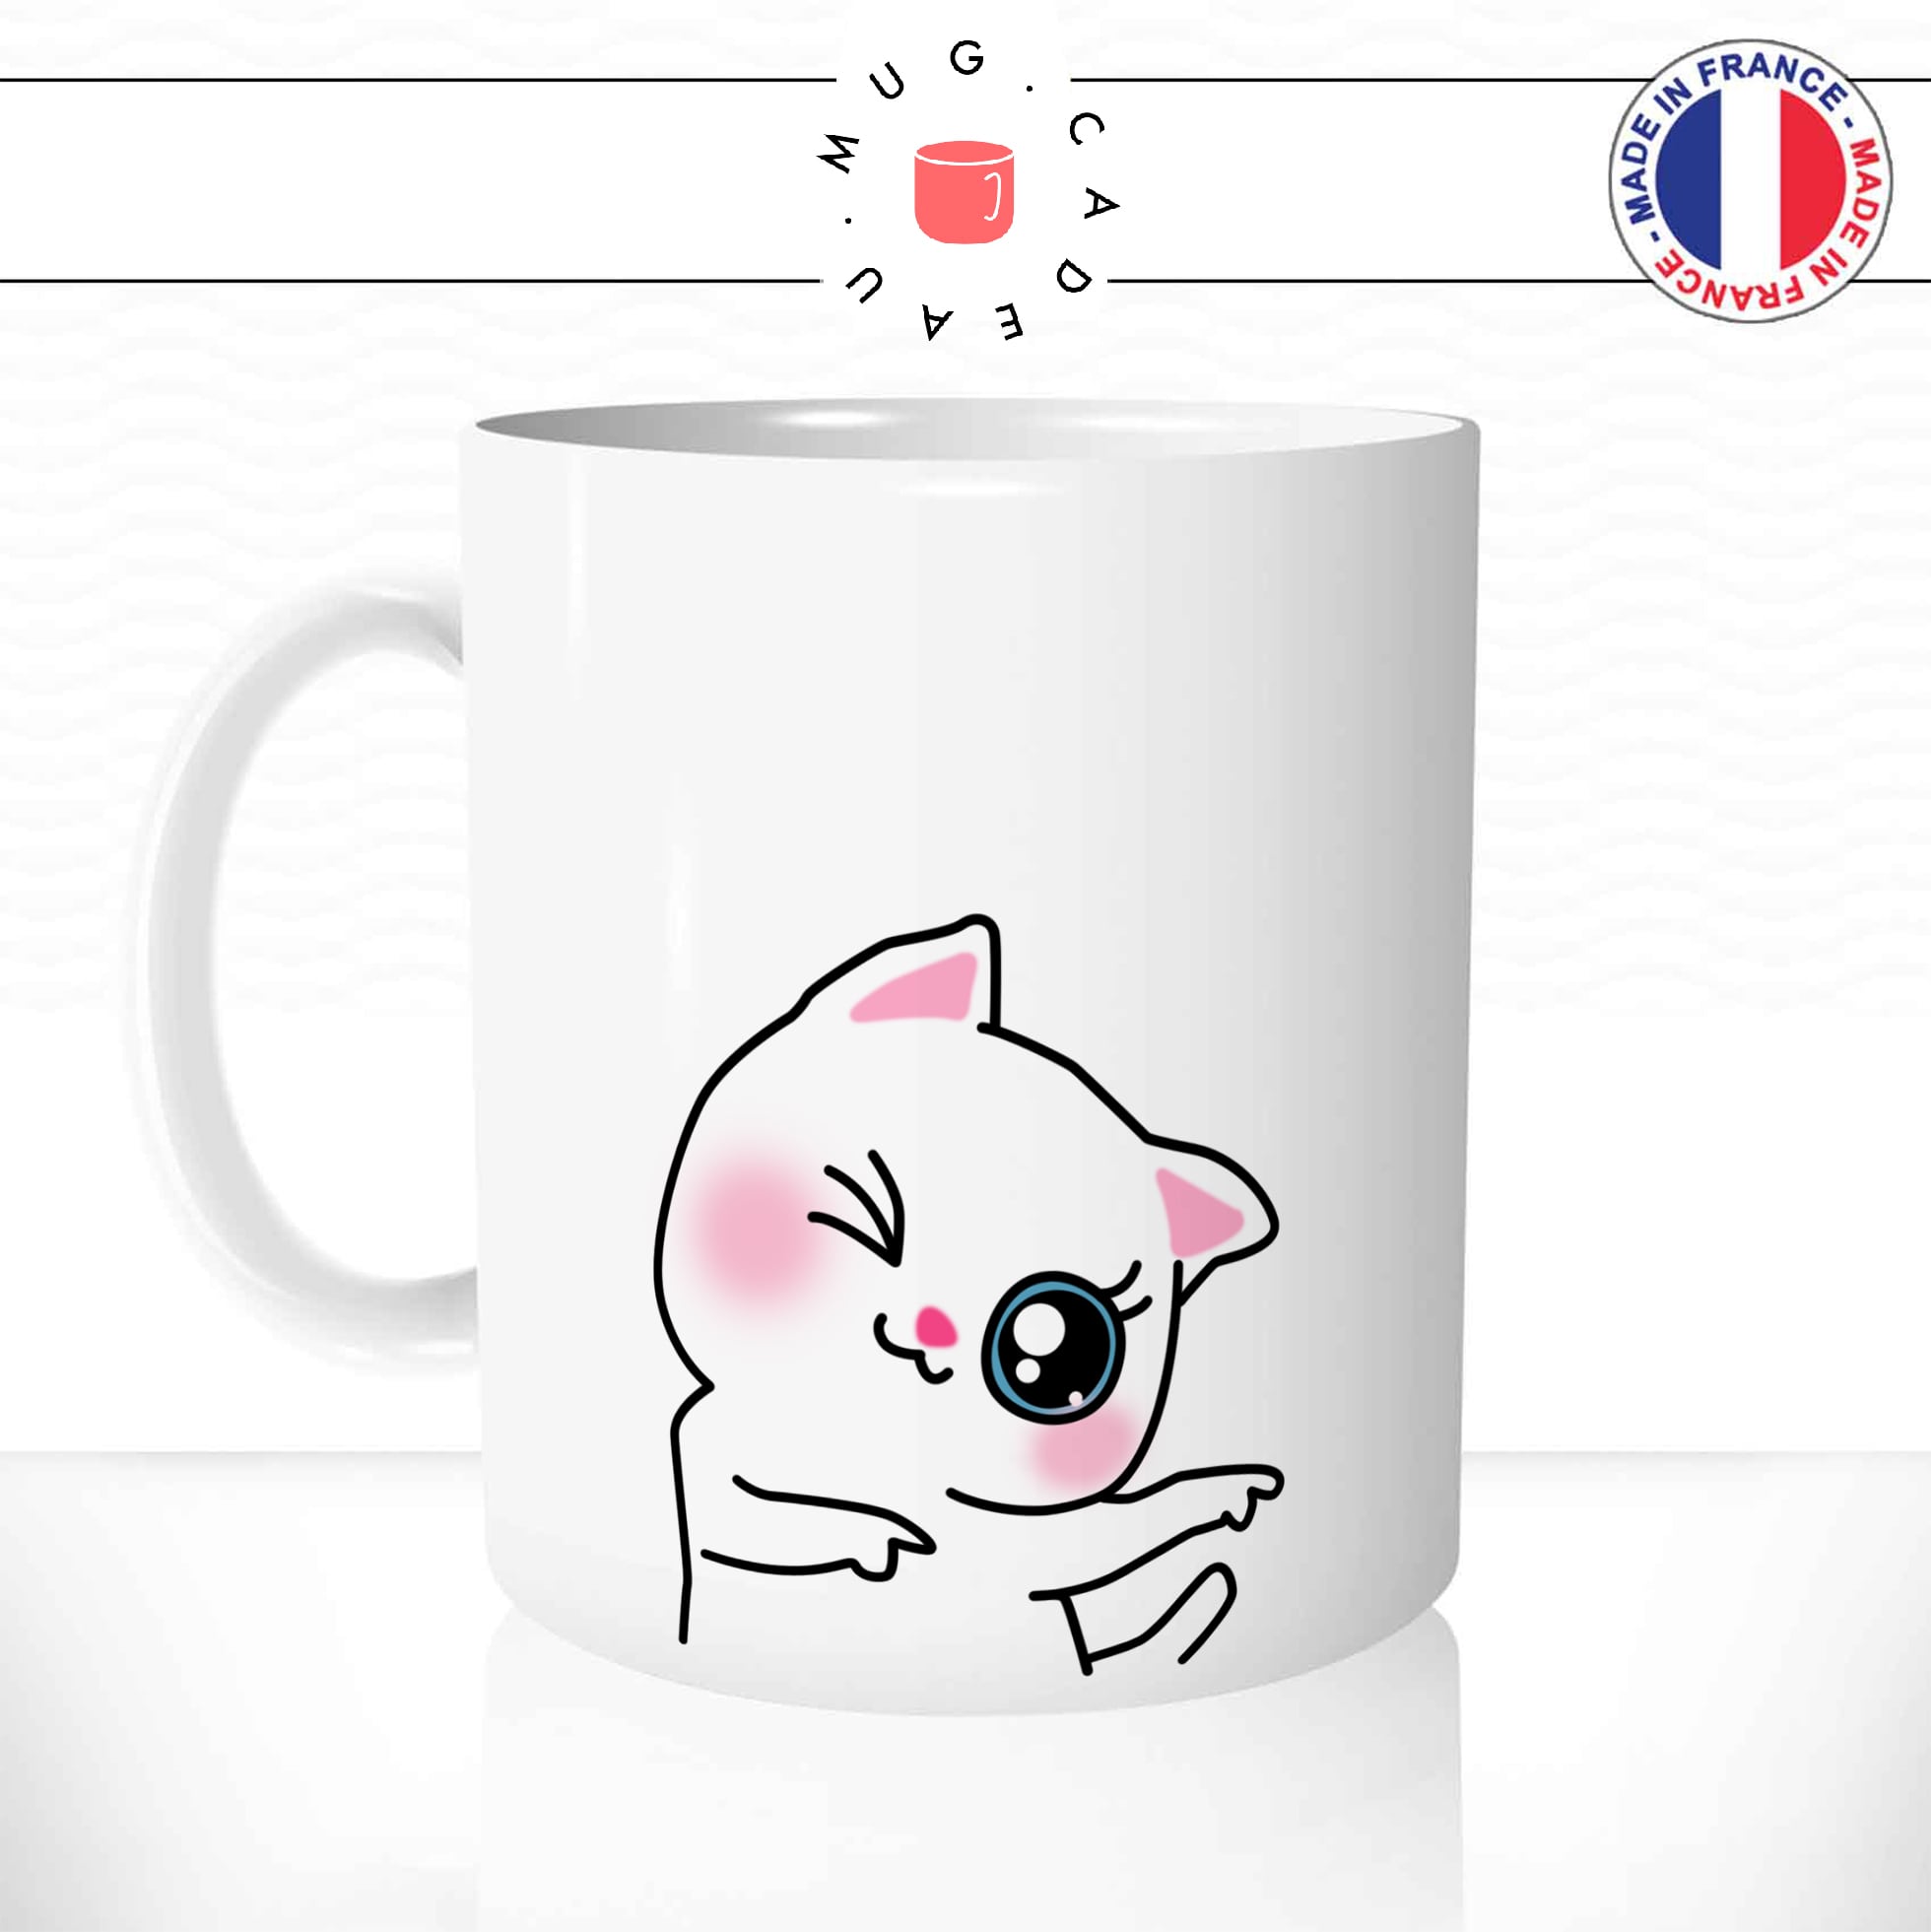 mug-tasse-chat-chaton-clin-d'oeil-kawaii-blanc-salut-miaou-mignon-dessin-animal-cafe-thé-idée-cadeau-original1